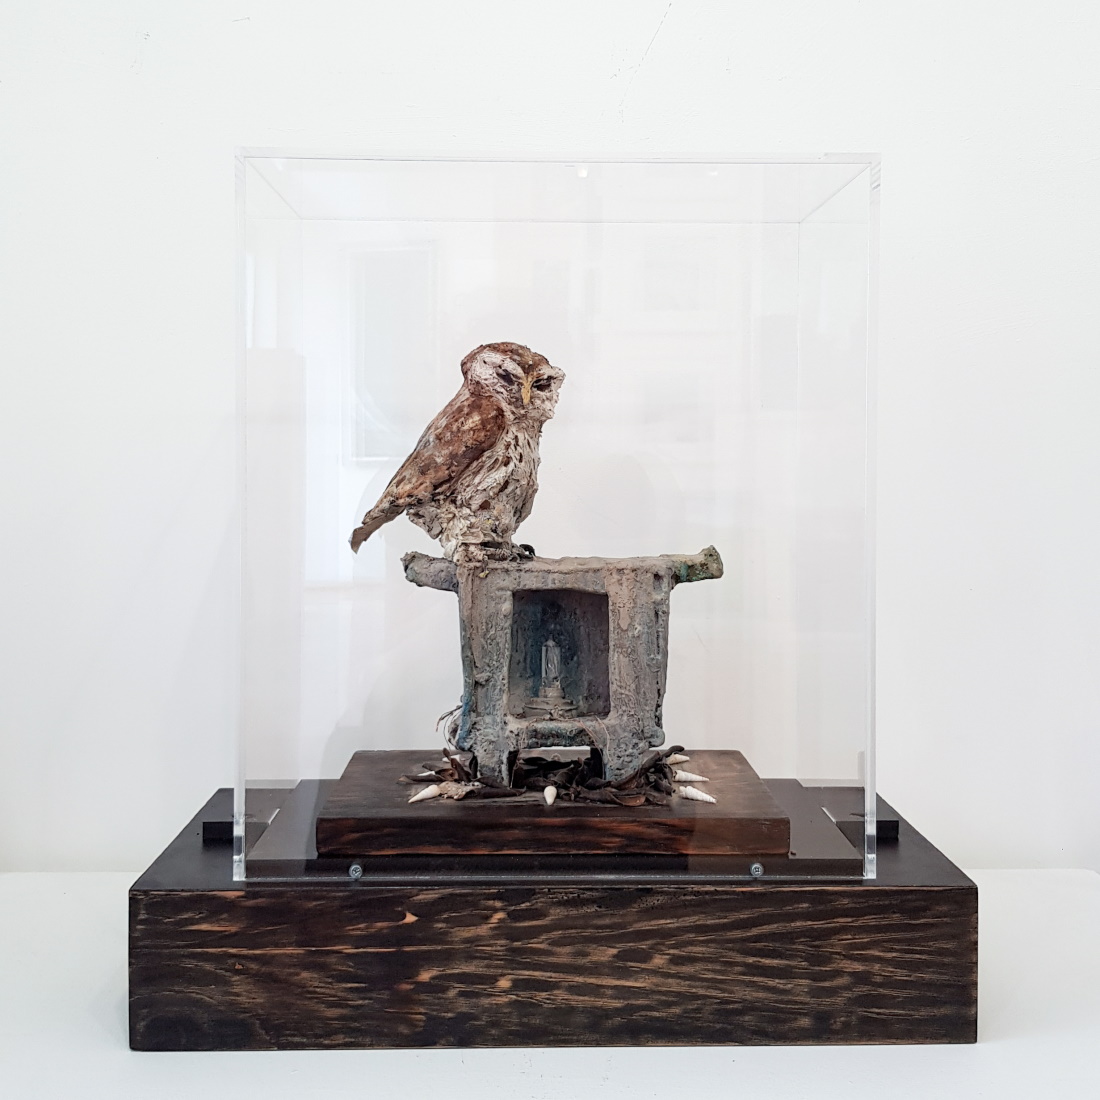 'To Wisdom: Athene Noctua' by artist Mark Gibbs